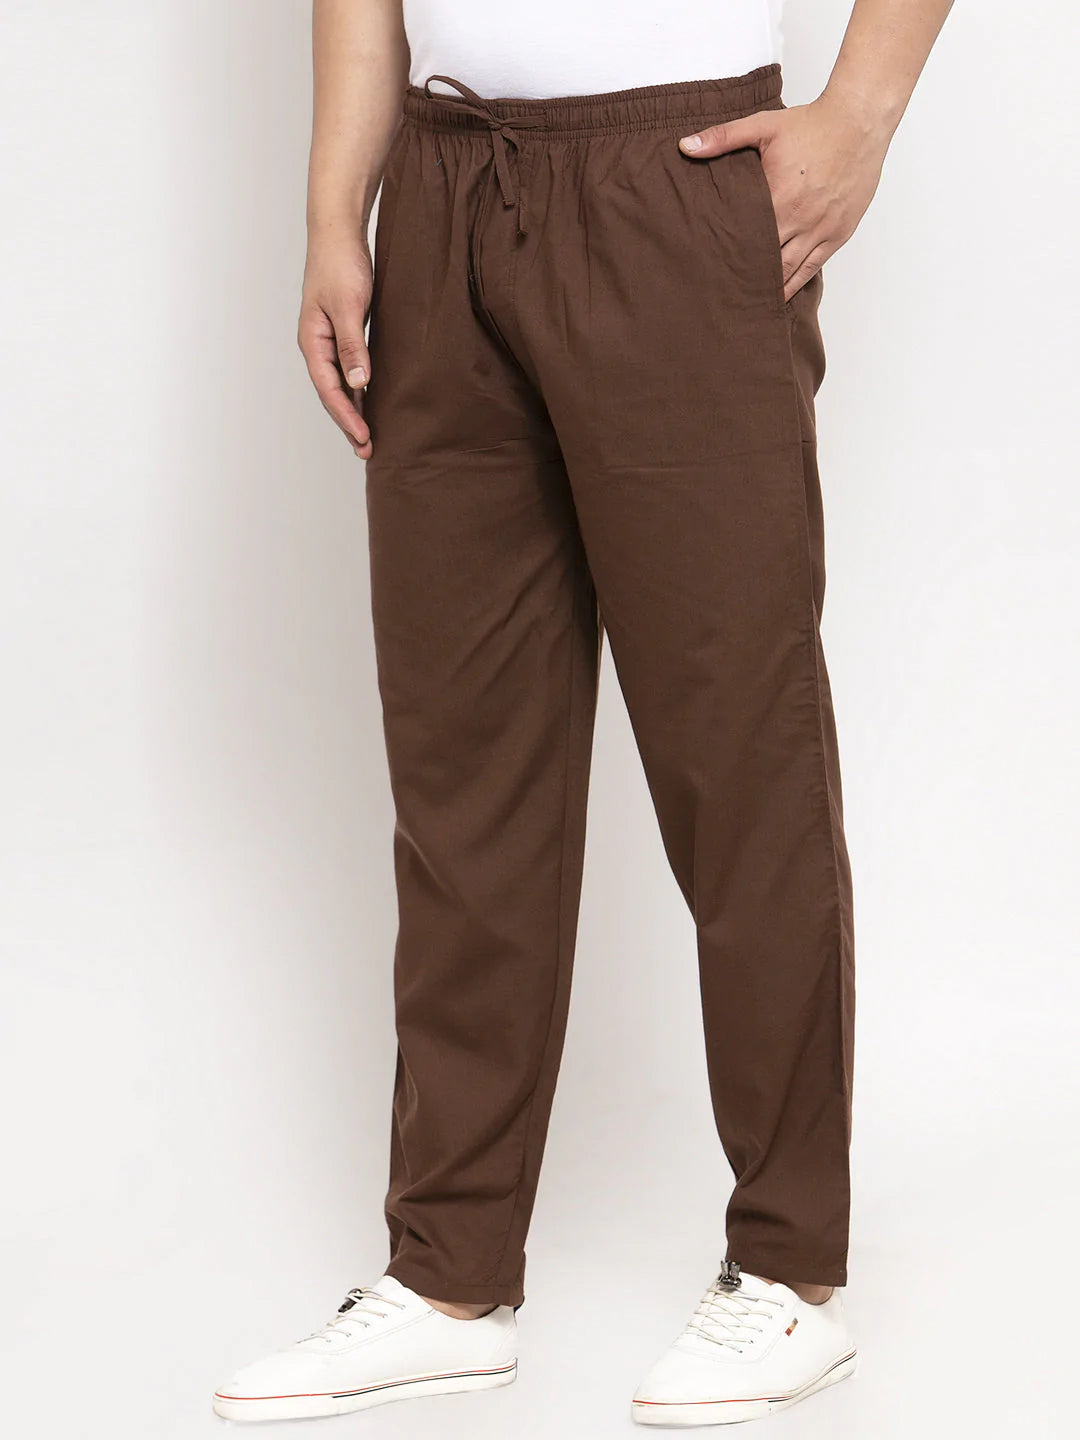 Jainish Men's Brown Solid Cotton Track Pants ( JOG 011Coffee )